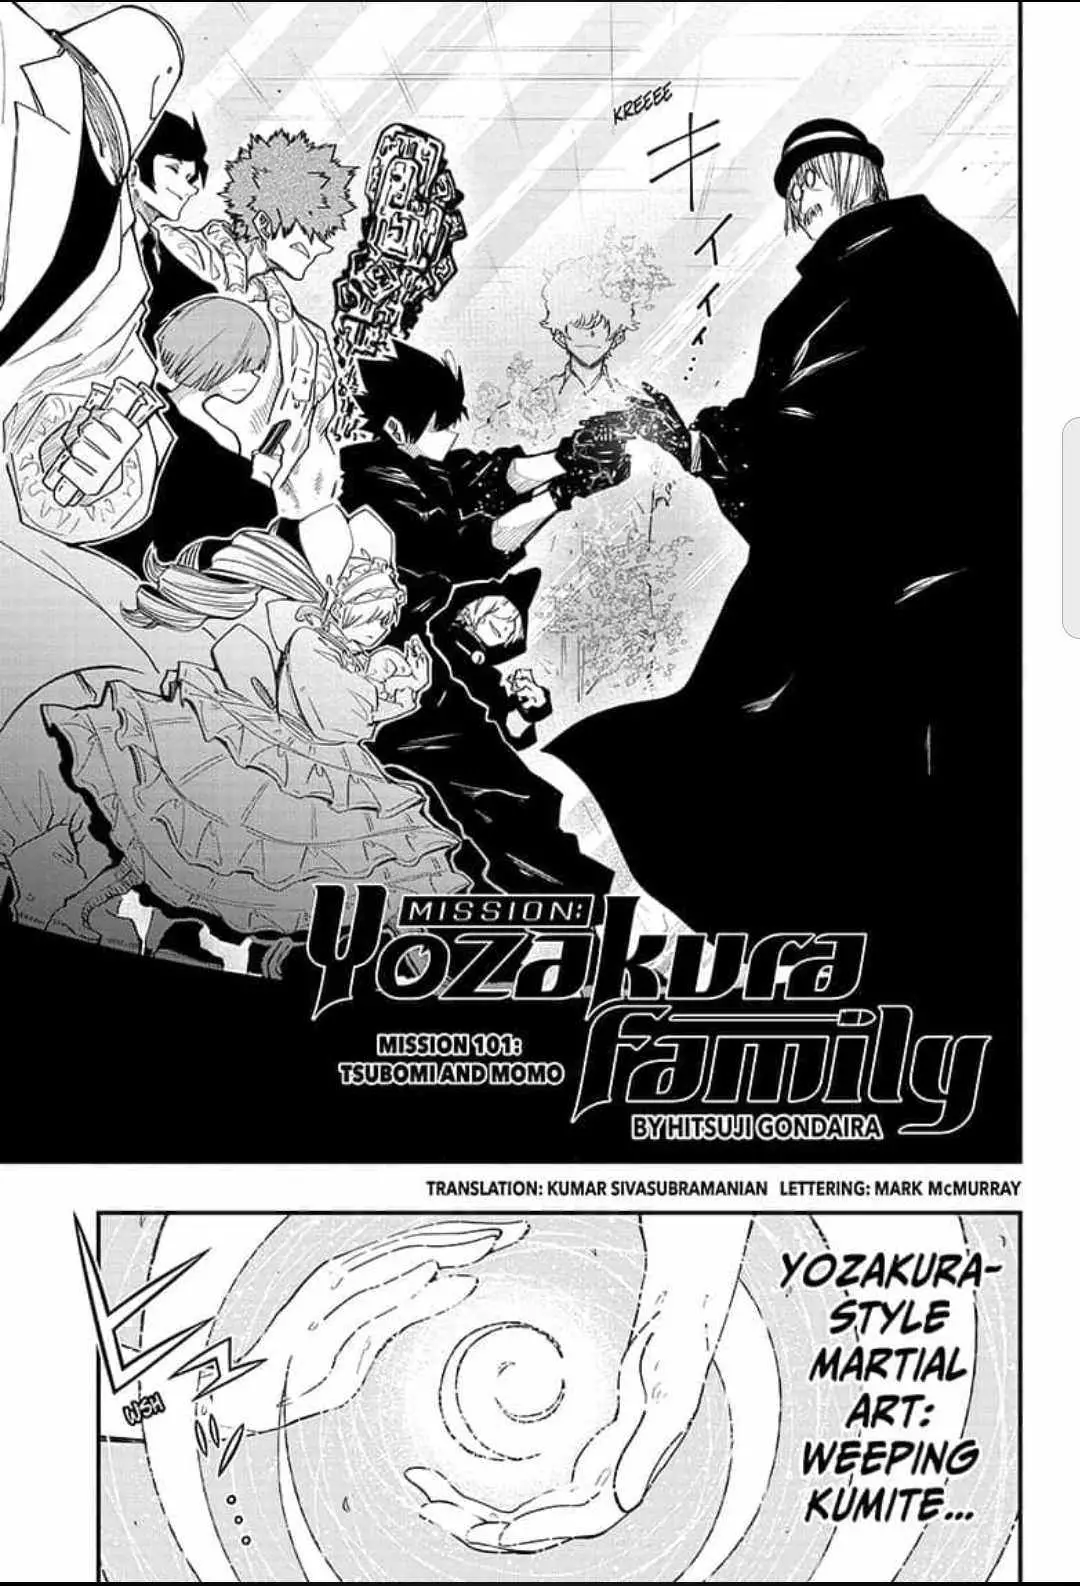 Mission: Yozakura Family - 101 page 1-c35c01ea